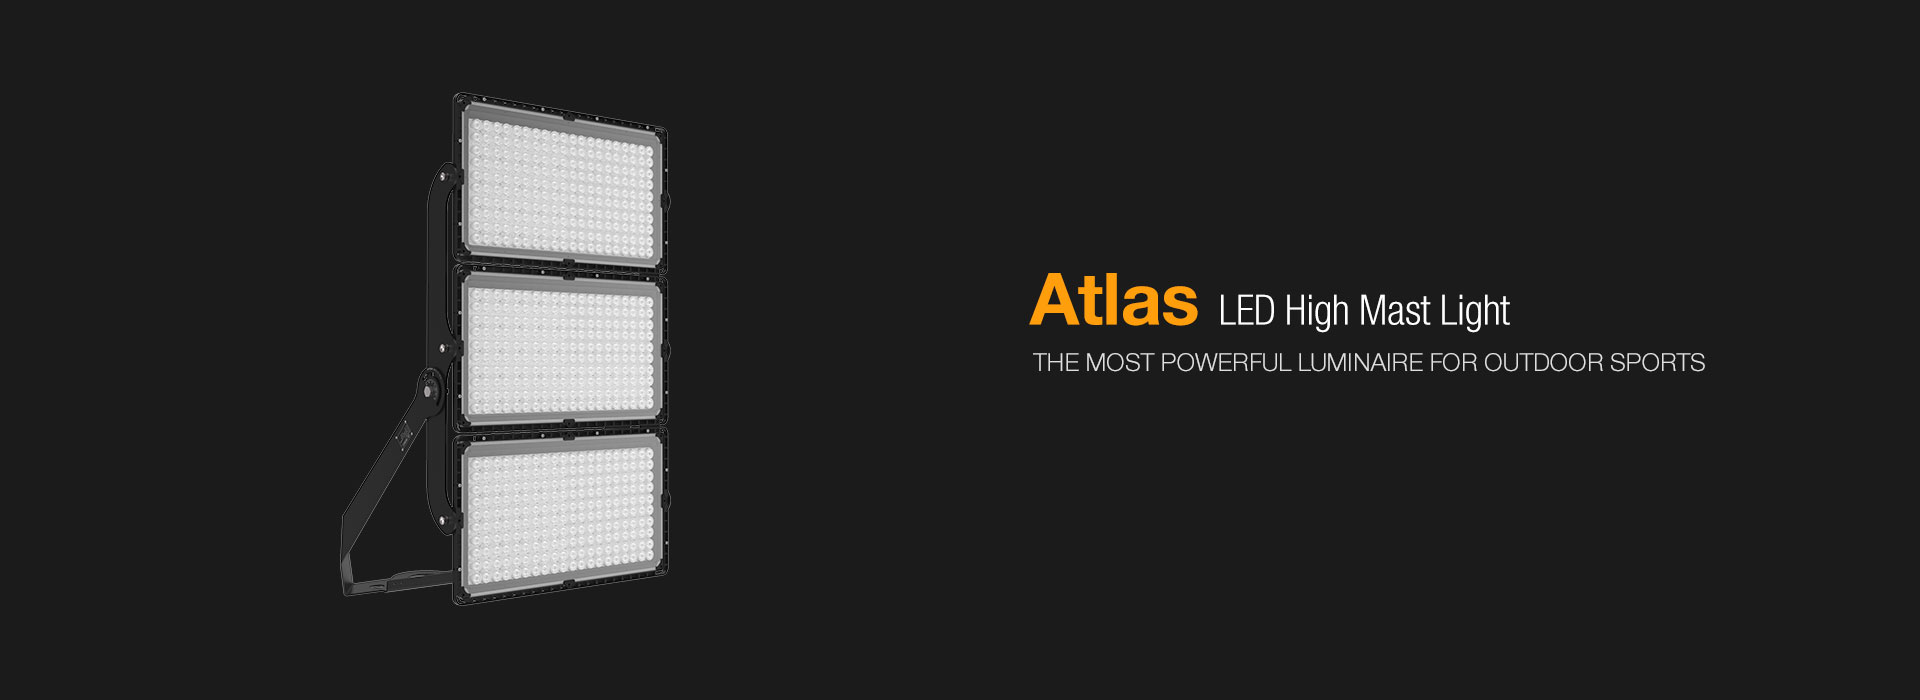 Atlas LED High Mast Light